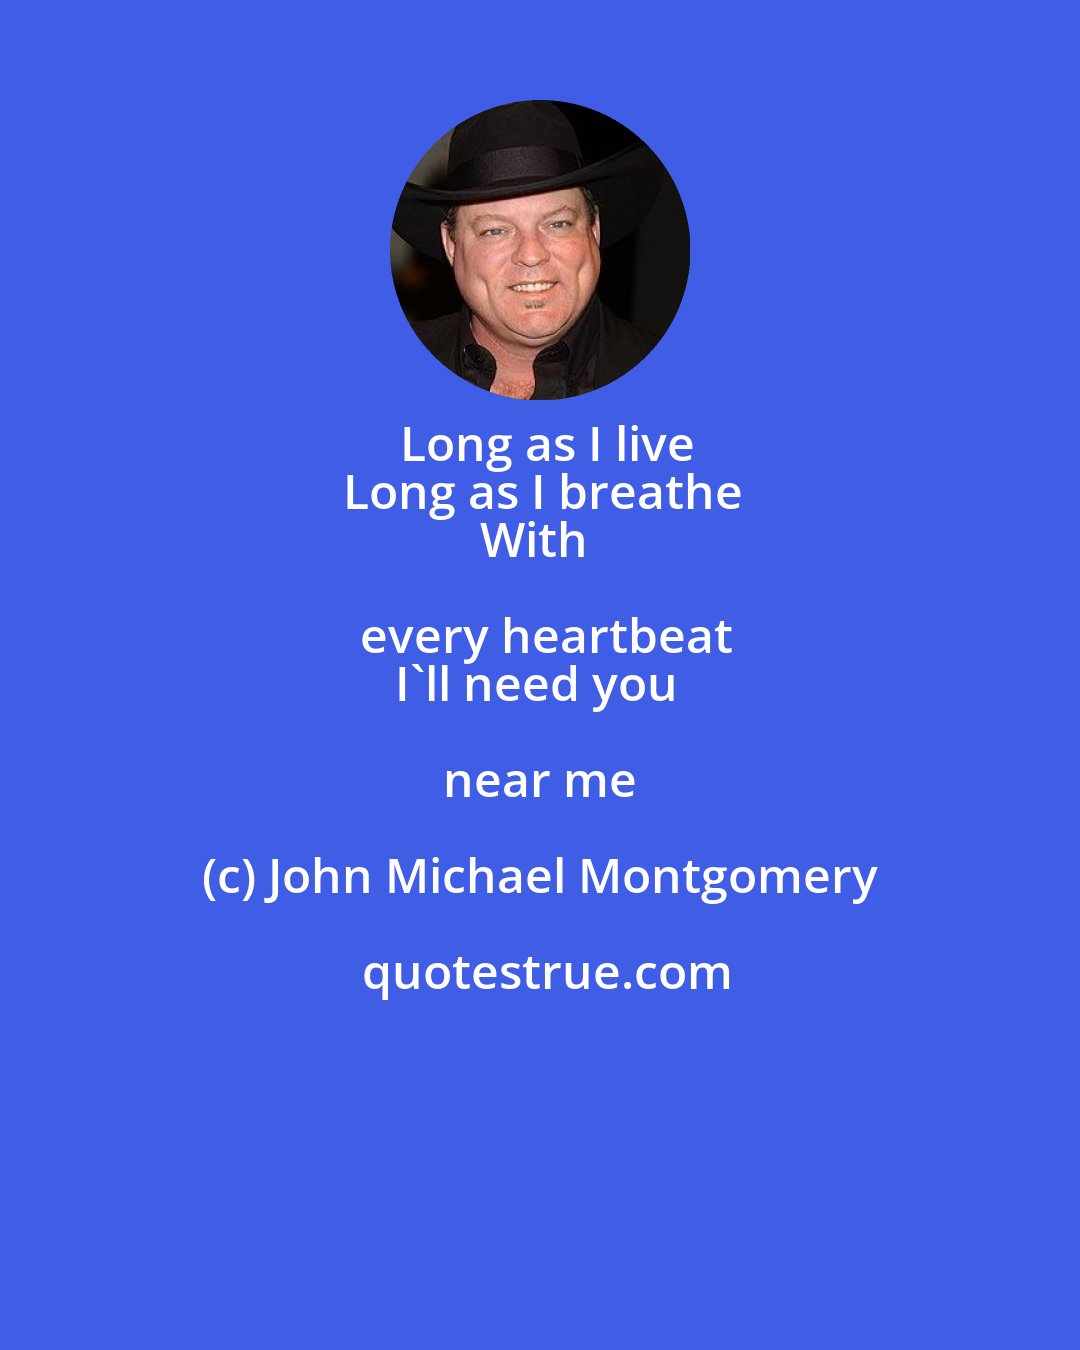 John Michael Montgomery: Long as I live
Long as I breathe
With every heartbeat
I'll need you near me